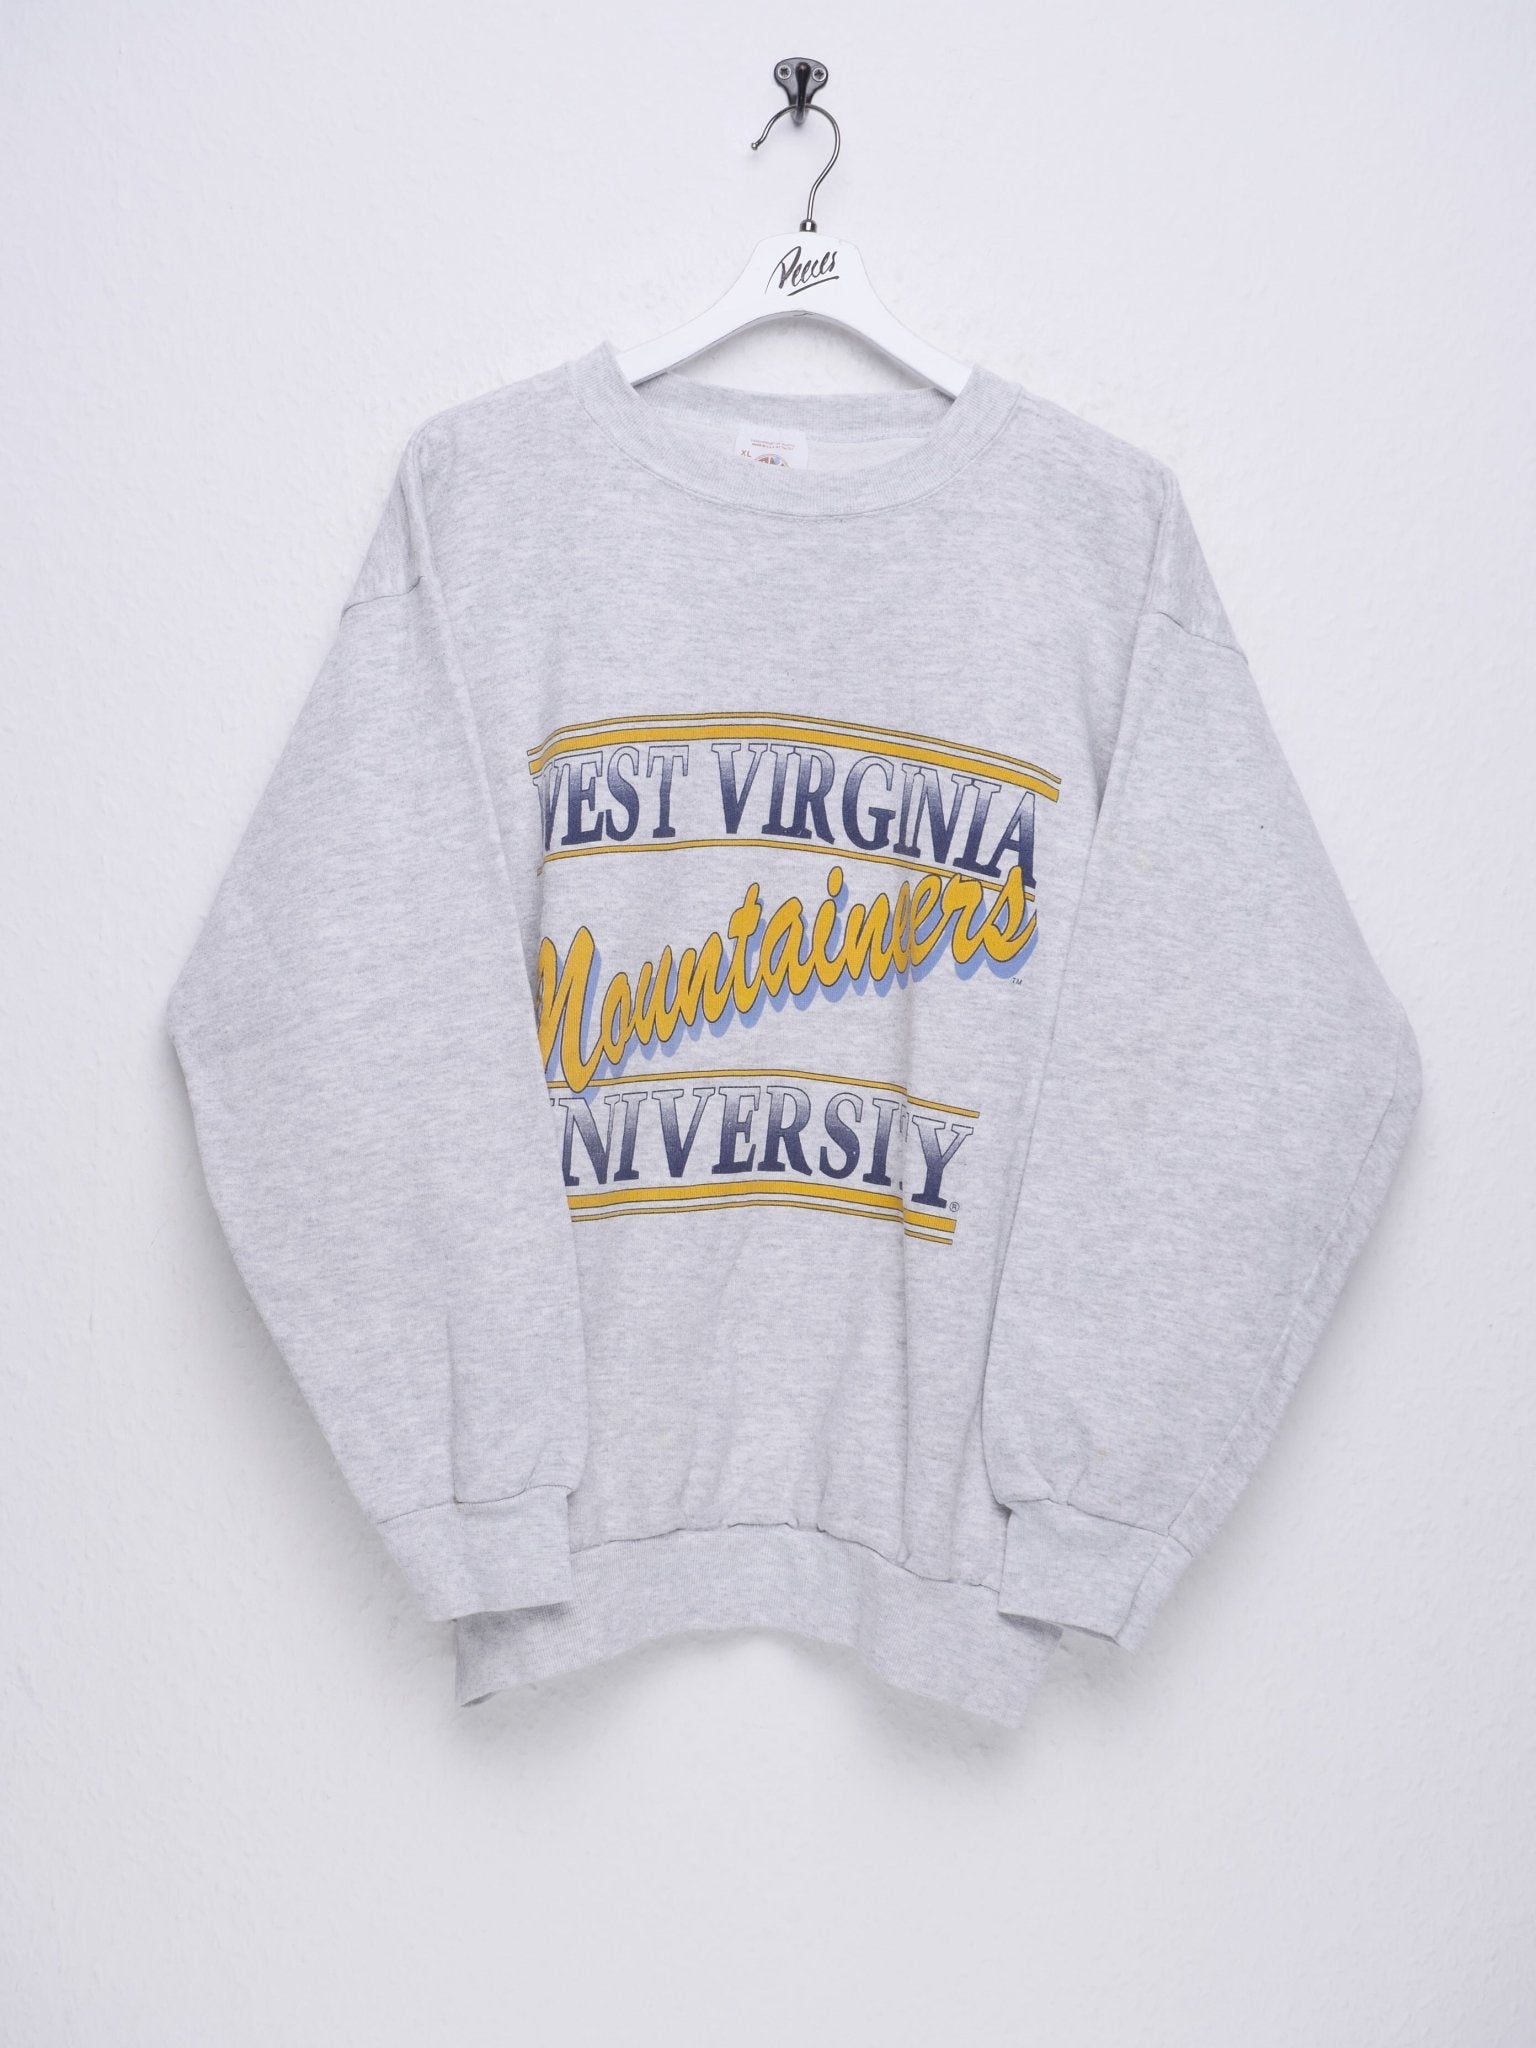 West Virginia printed Graphic Vintage Sweater - Peeces